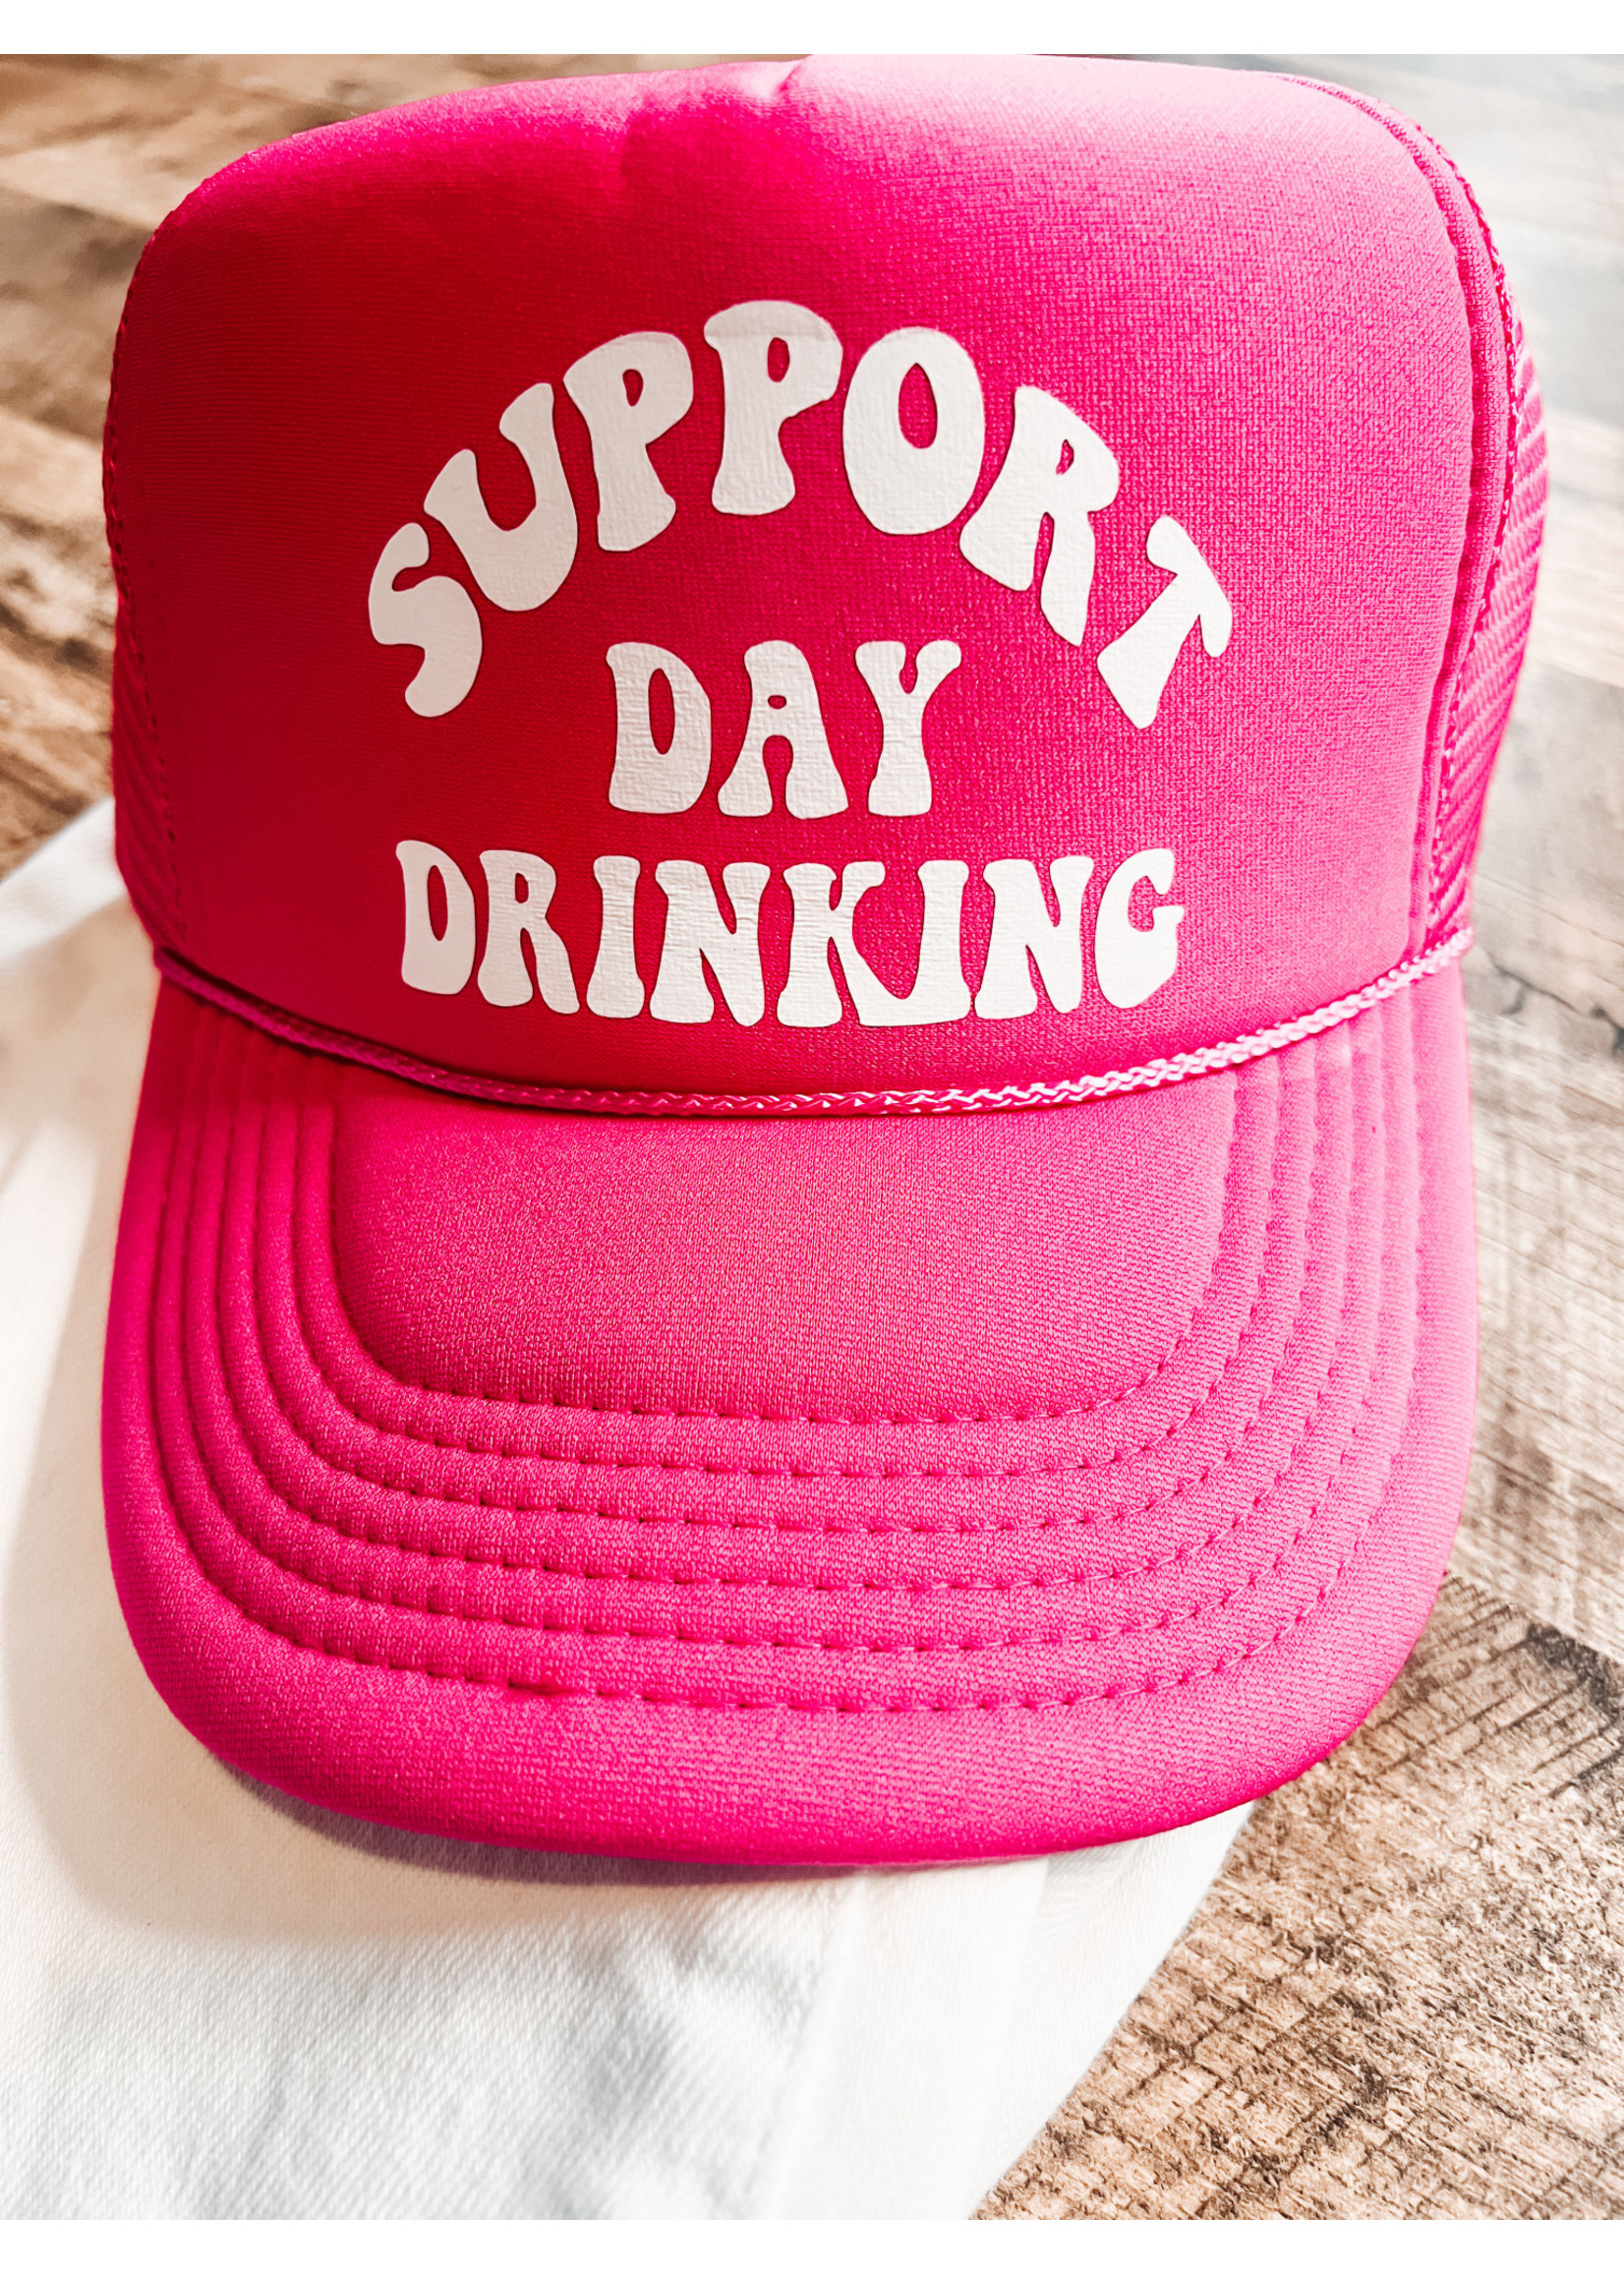 Support Day Drinking Trucker Hat